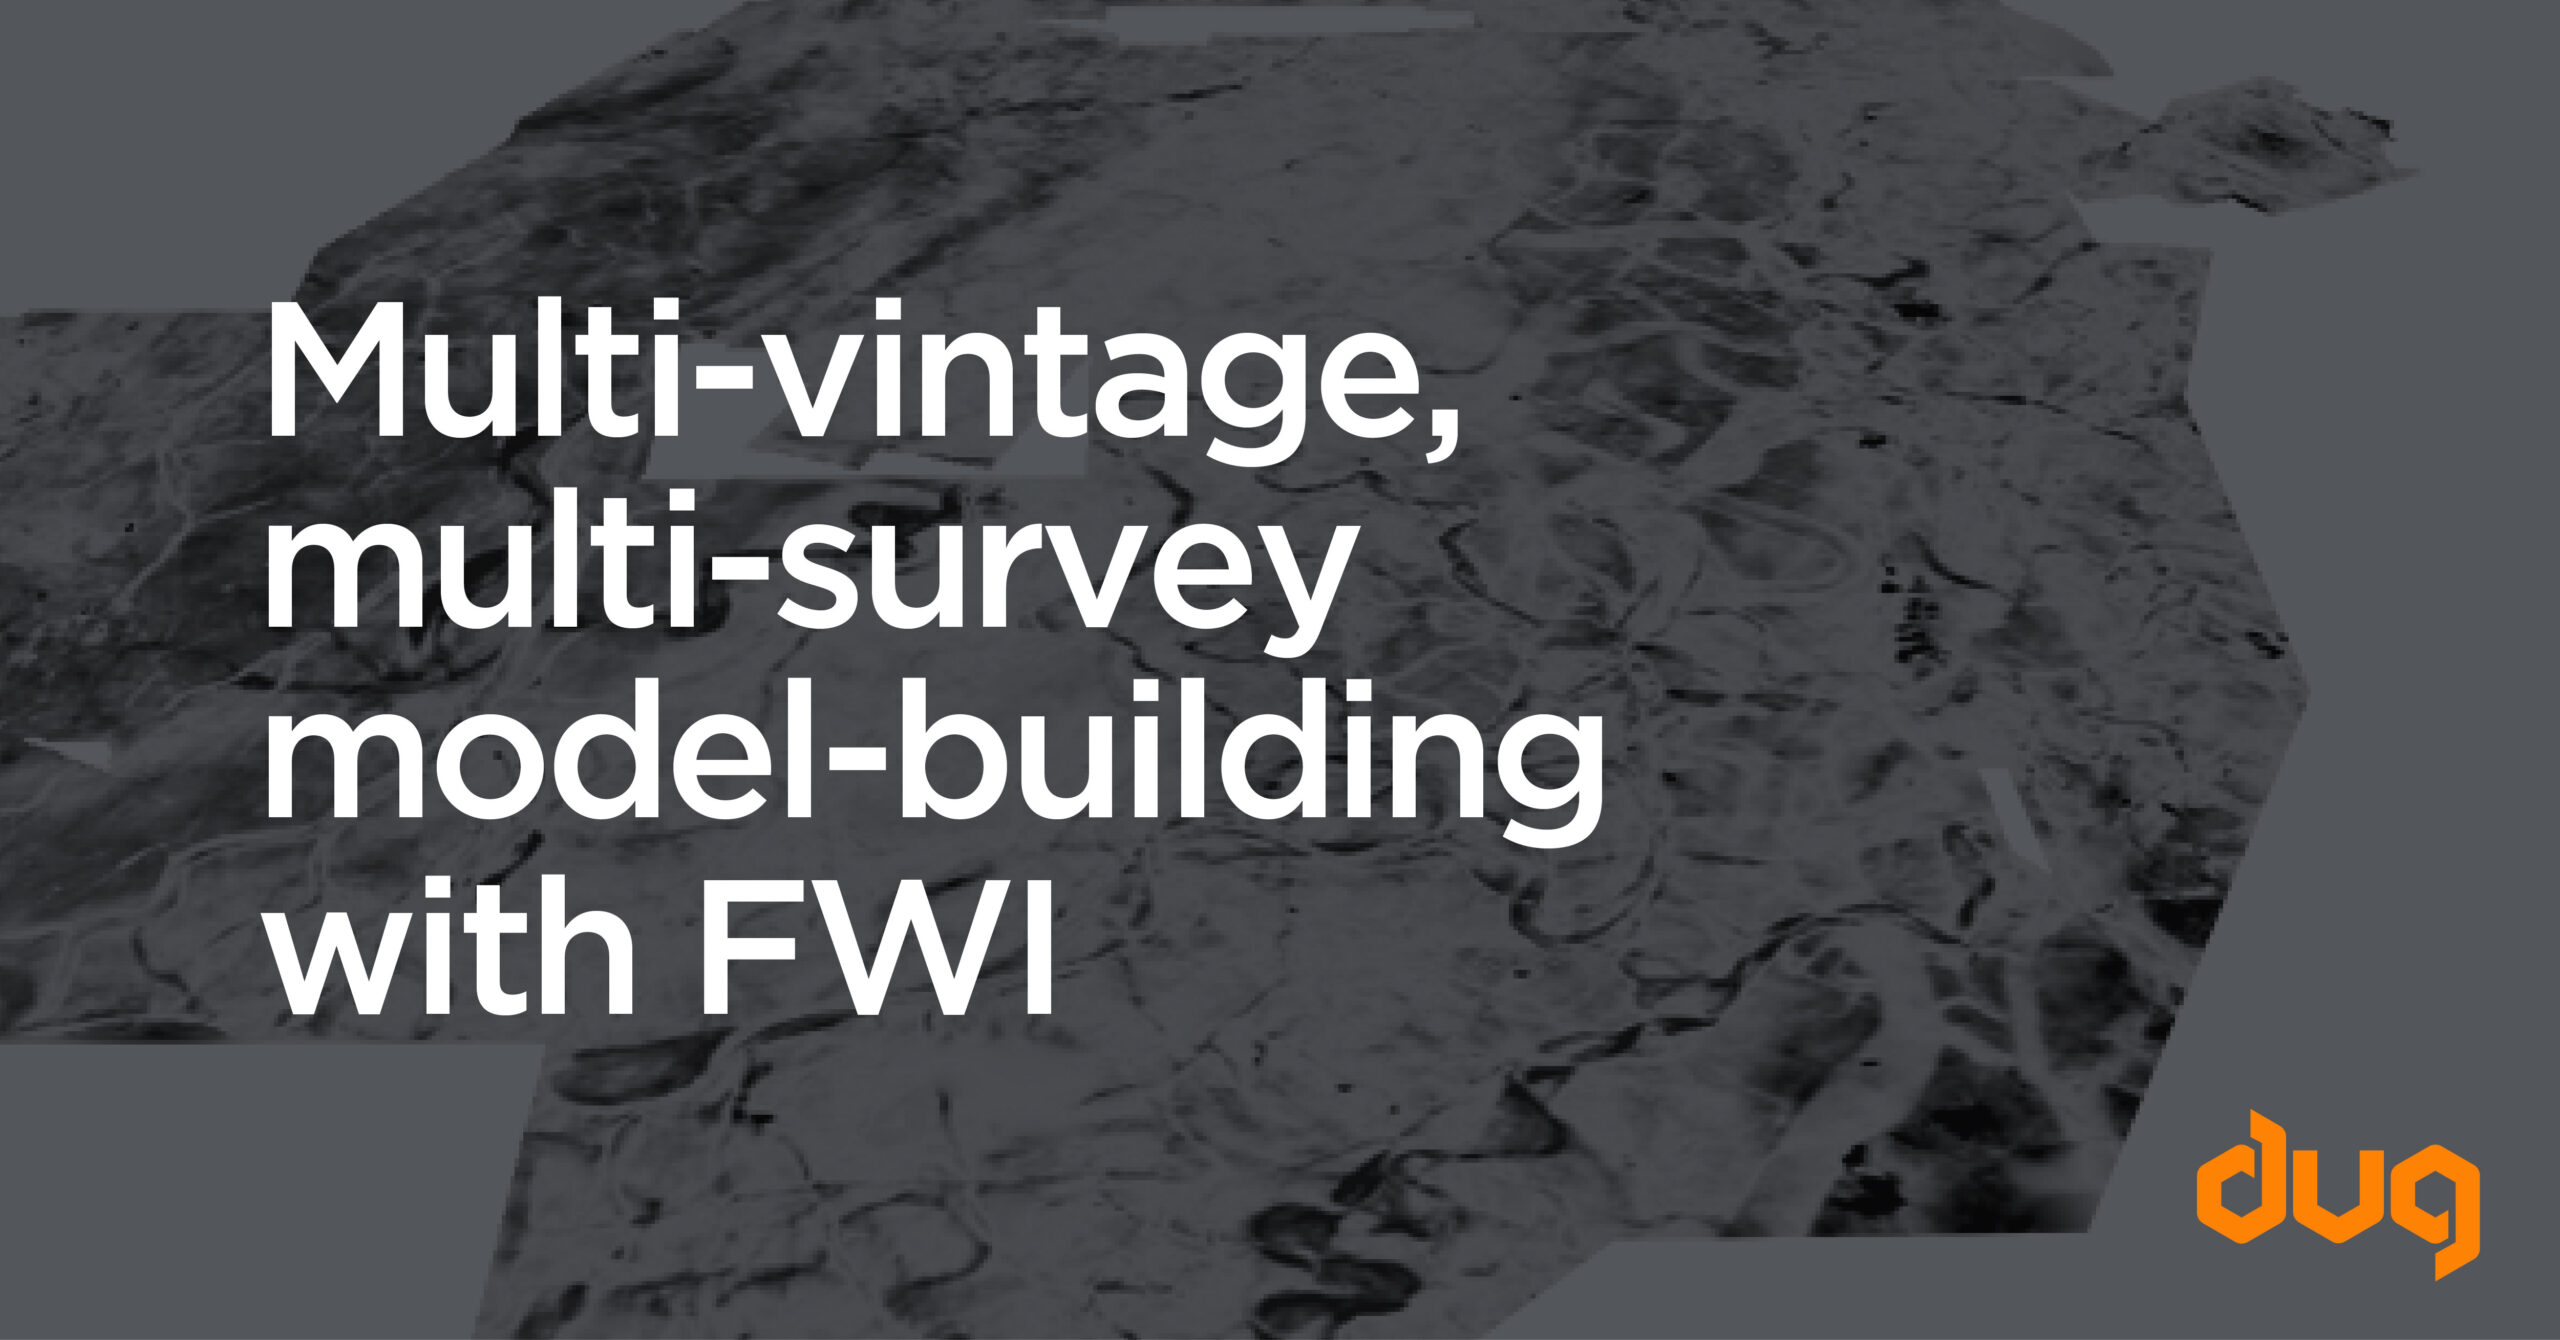 Multi-vintage, multi-survey model-building with FWI